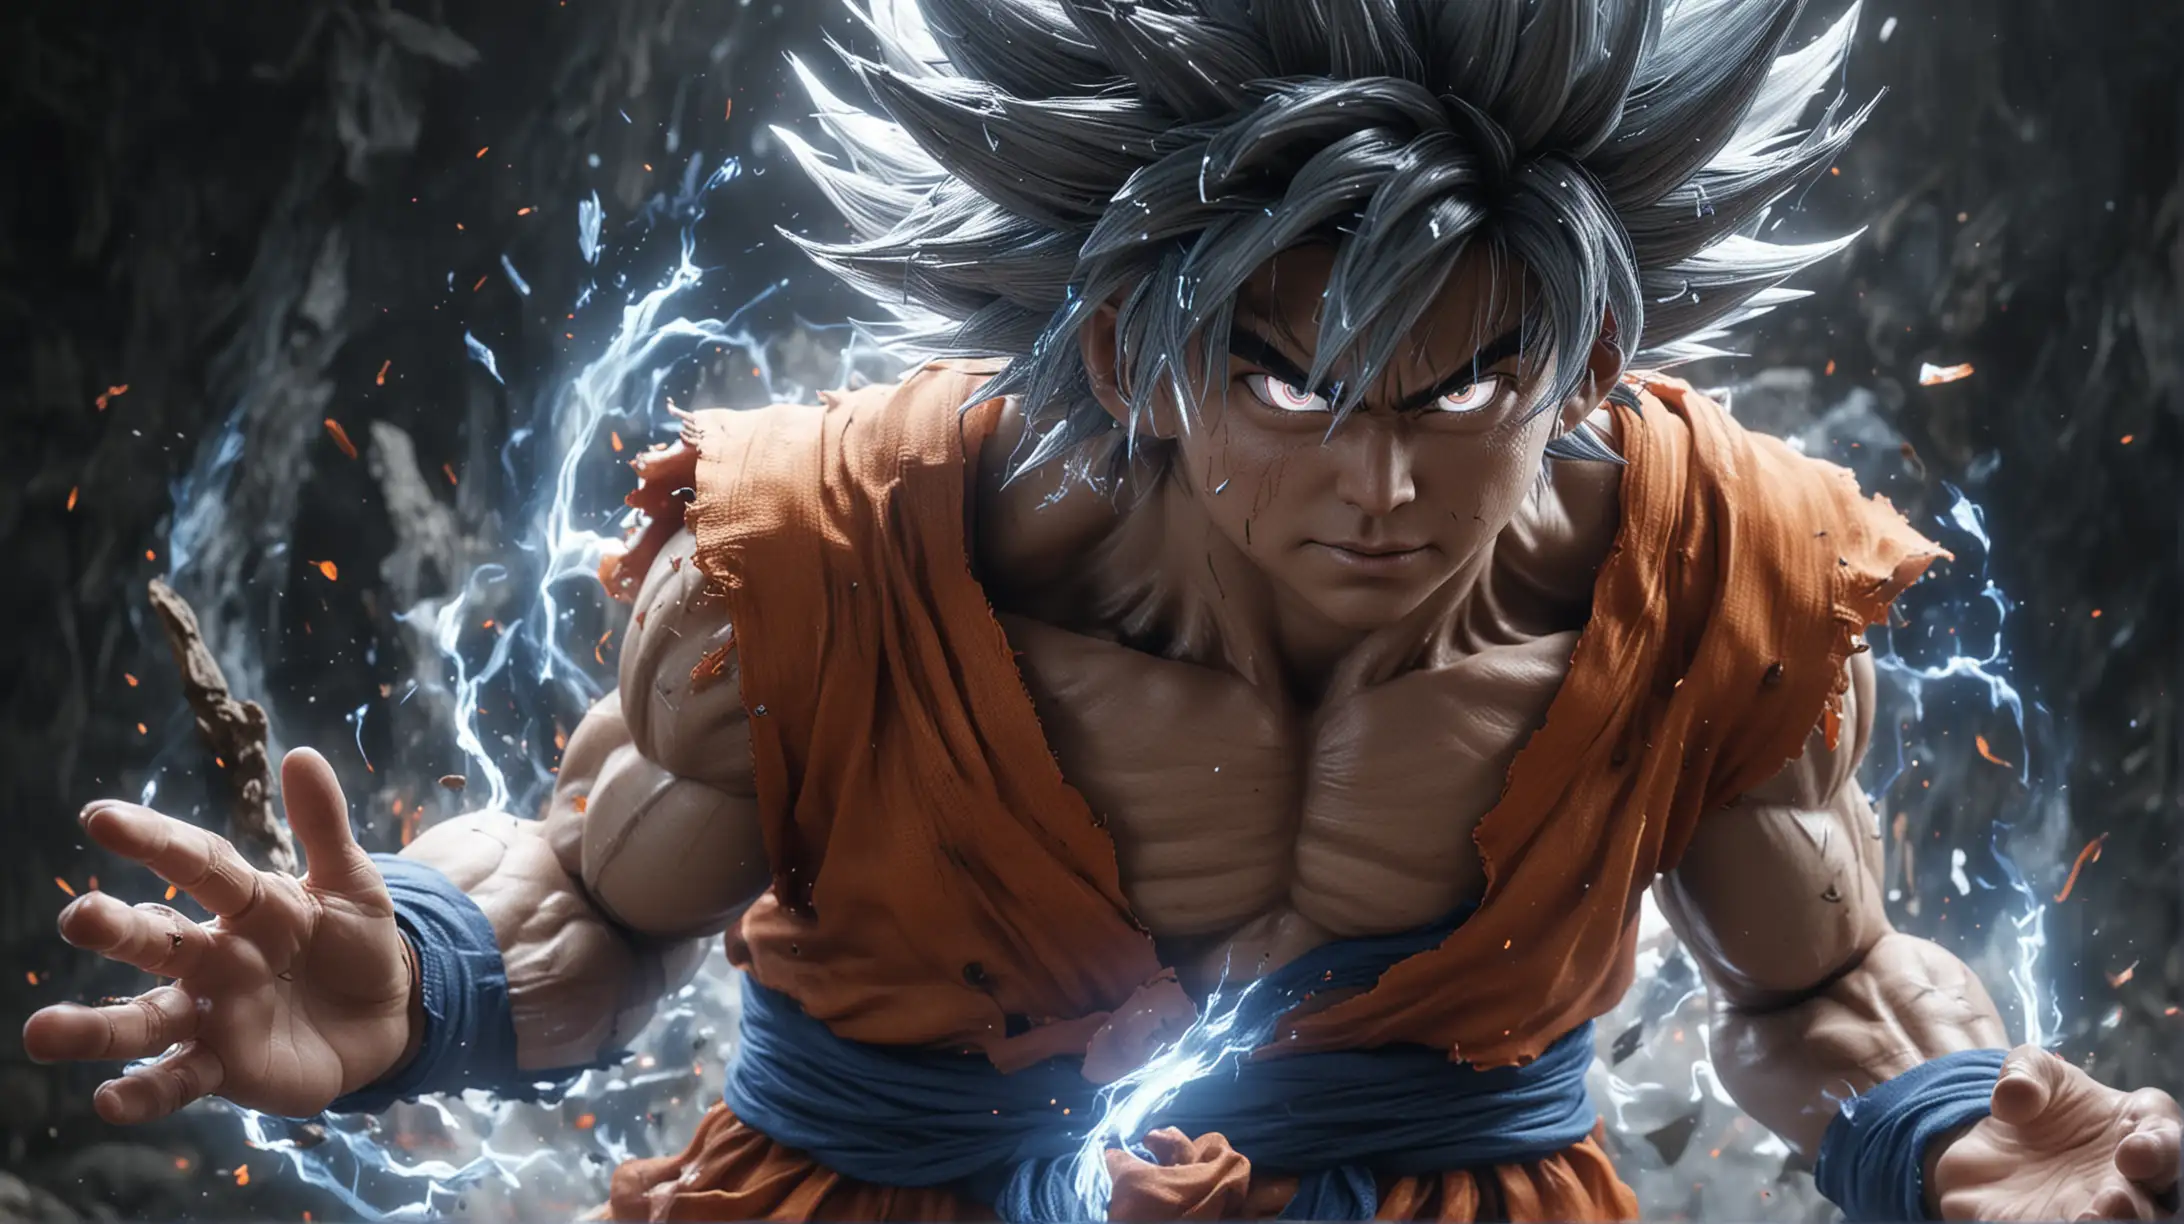 Goku Ultra Instinct Fighting Frieza in Hyperrealistic 4K Illustration